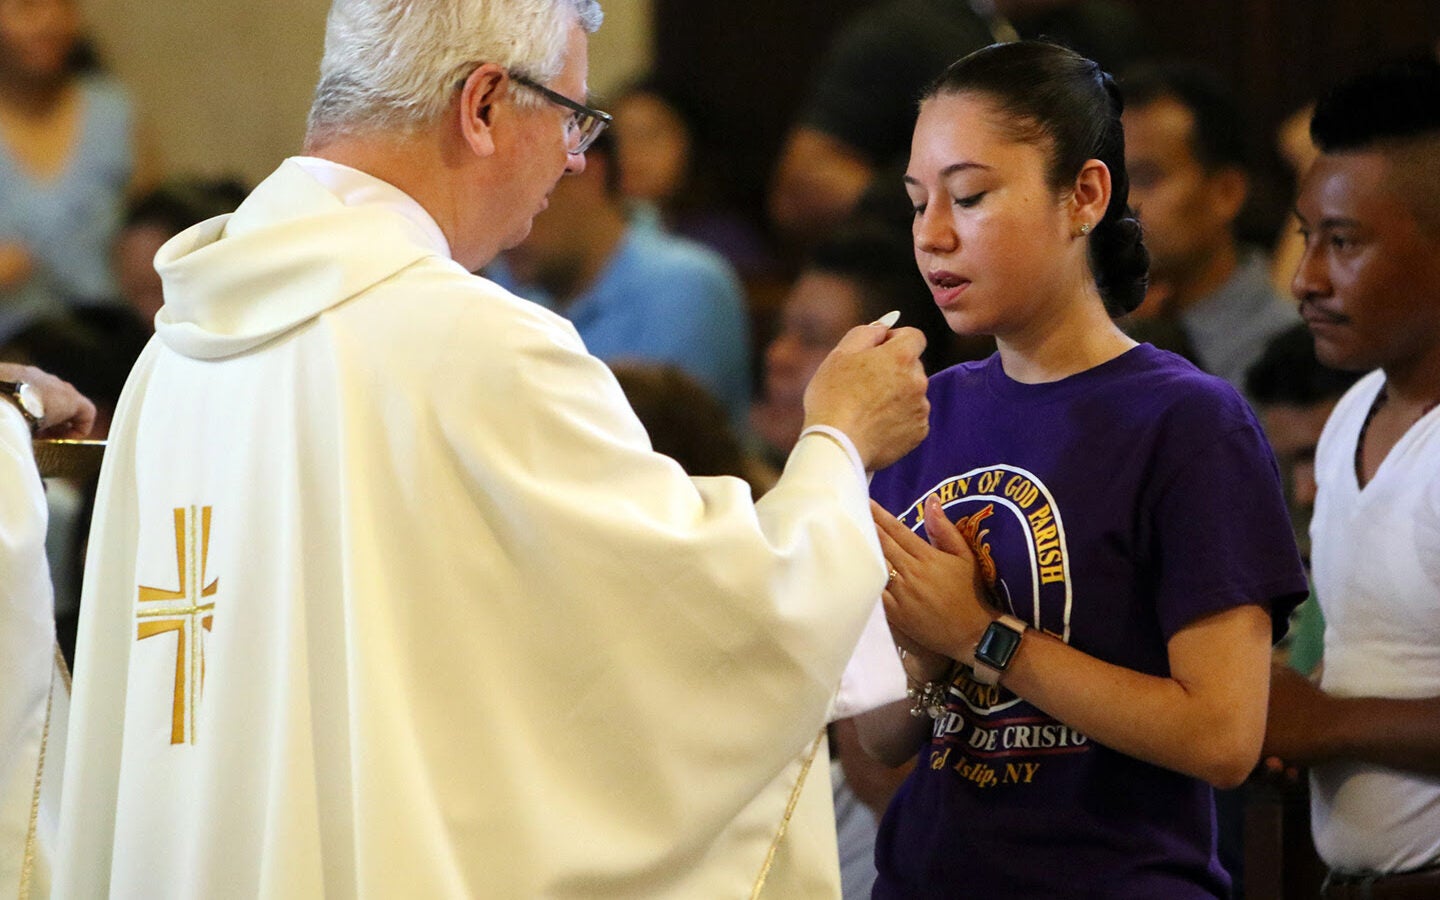 Young Woman Receiving Communion